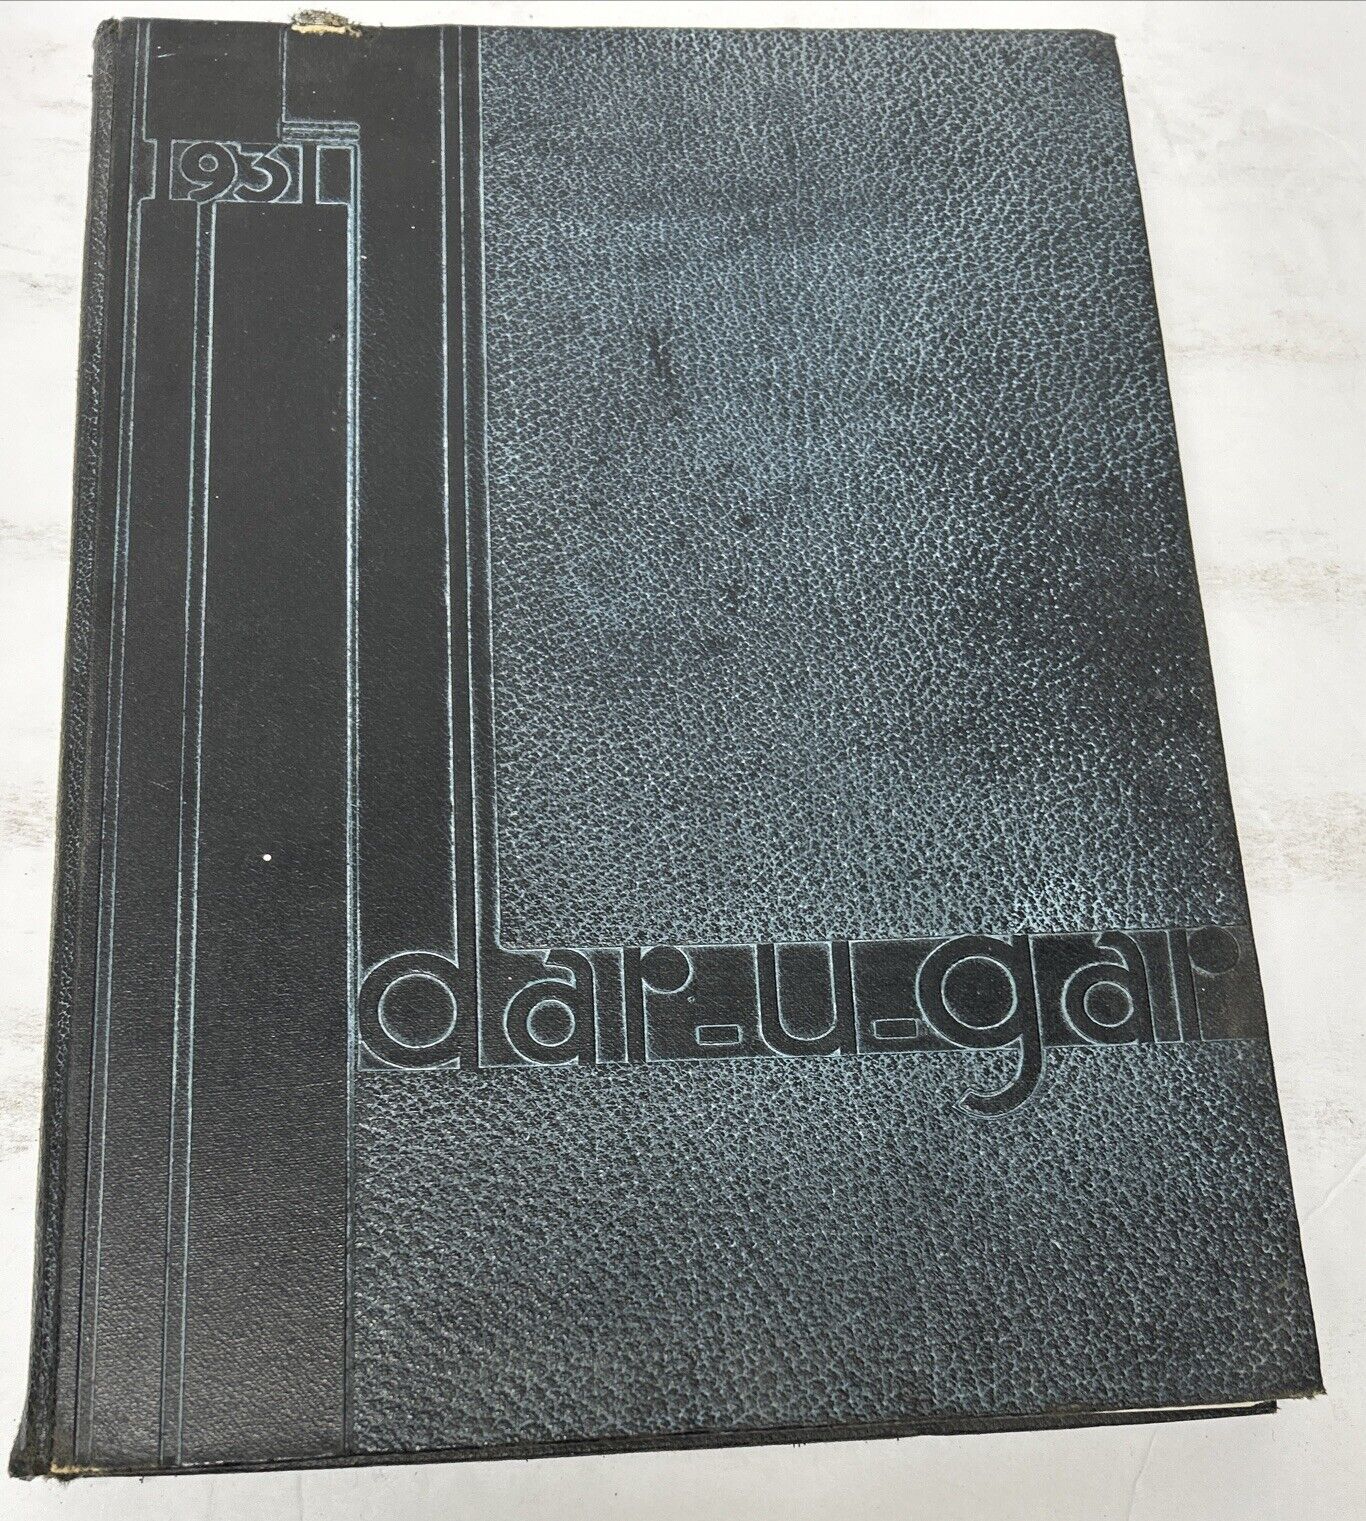 Compton Junior College 1931 Yearbook | The Dar-u-gar